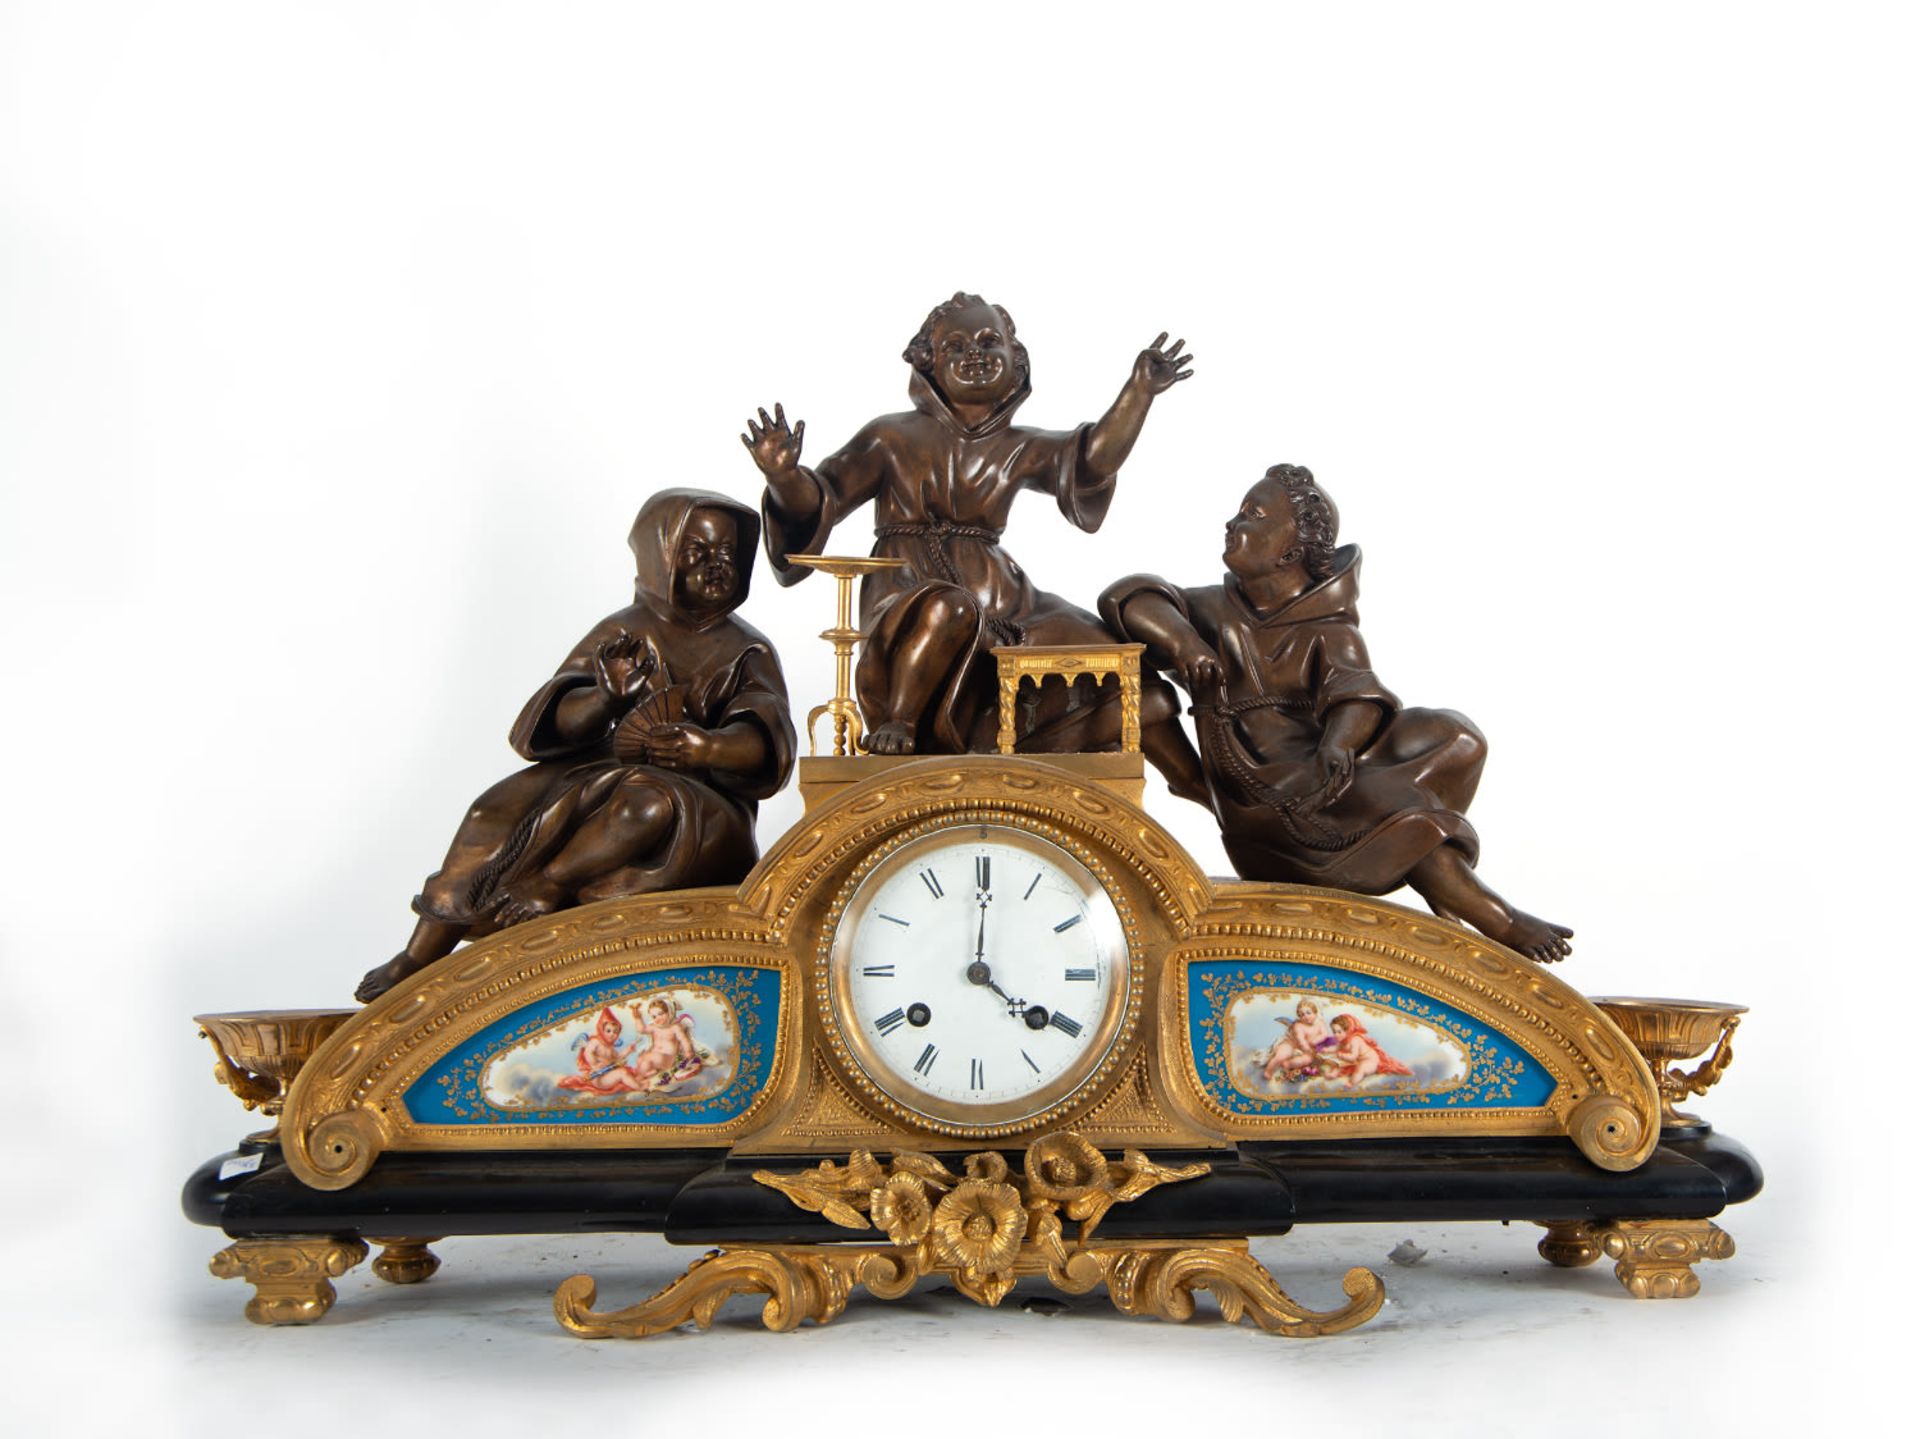 Napoleon III clock in gilt bronze depicting three altar boys, France, 19th century